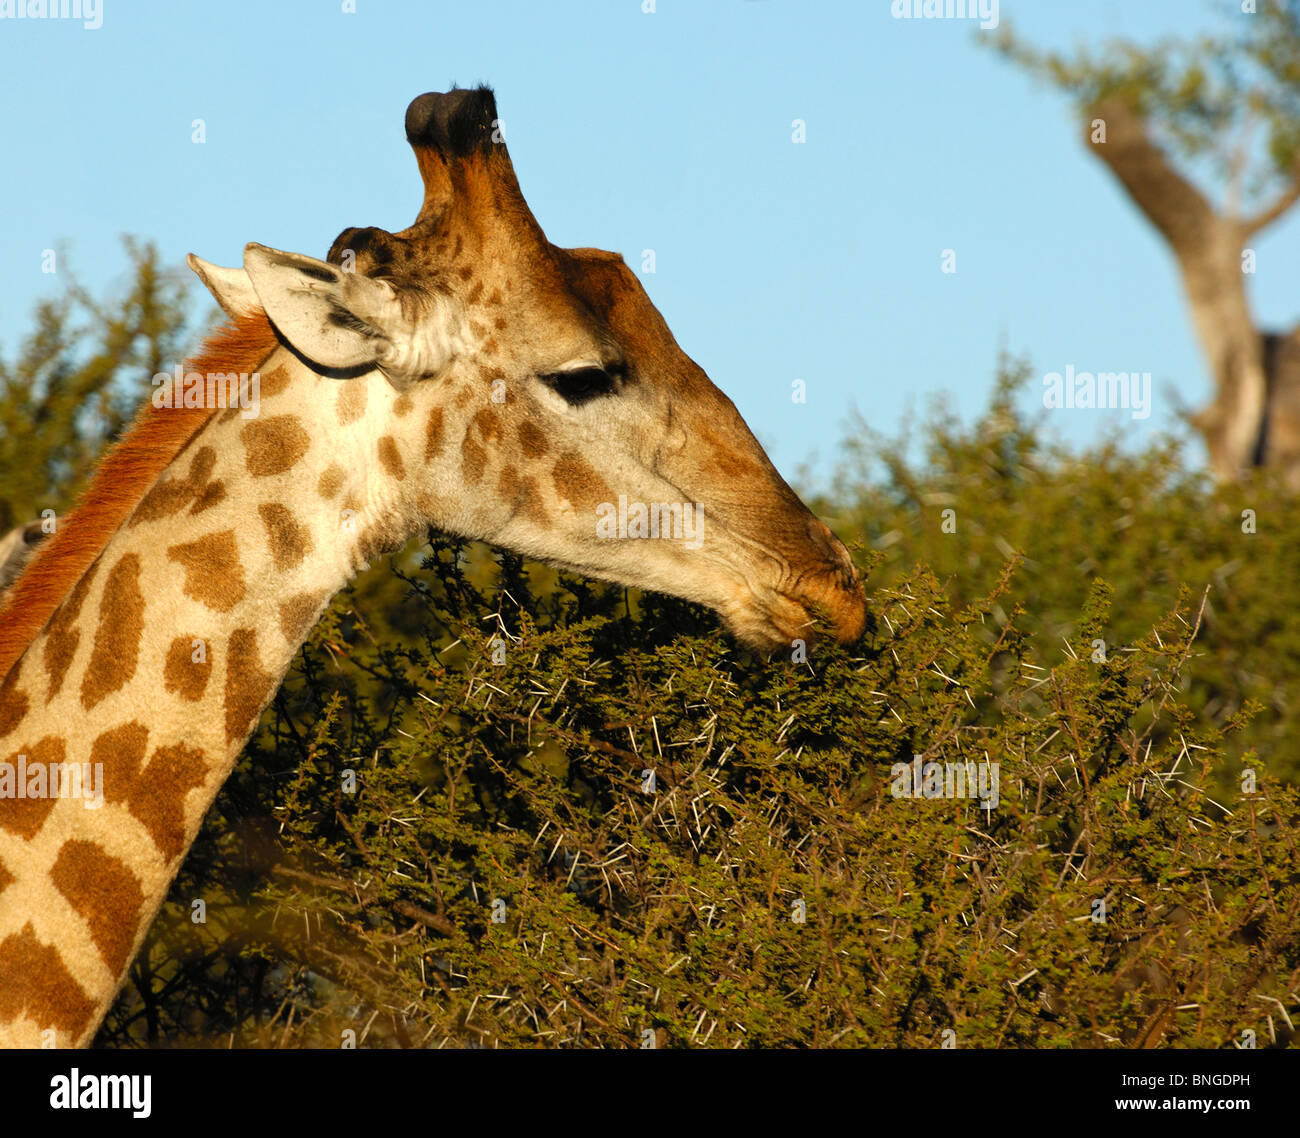 Jirafa , jirafa, camelopardalis, forrajeando en árboles de acacia, la Reserva de Caza Madikwe, Sudáfrica Foto de stock